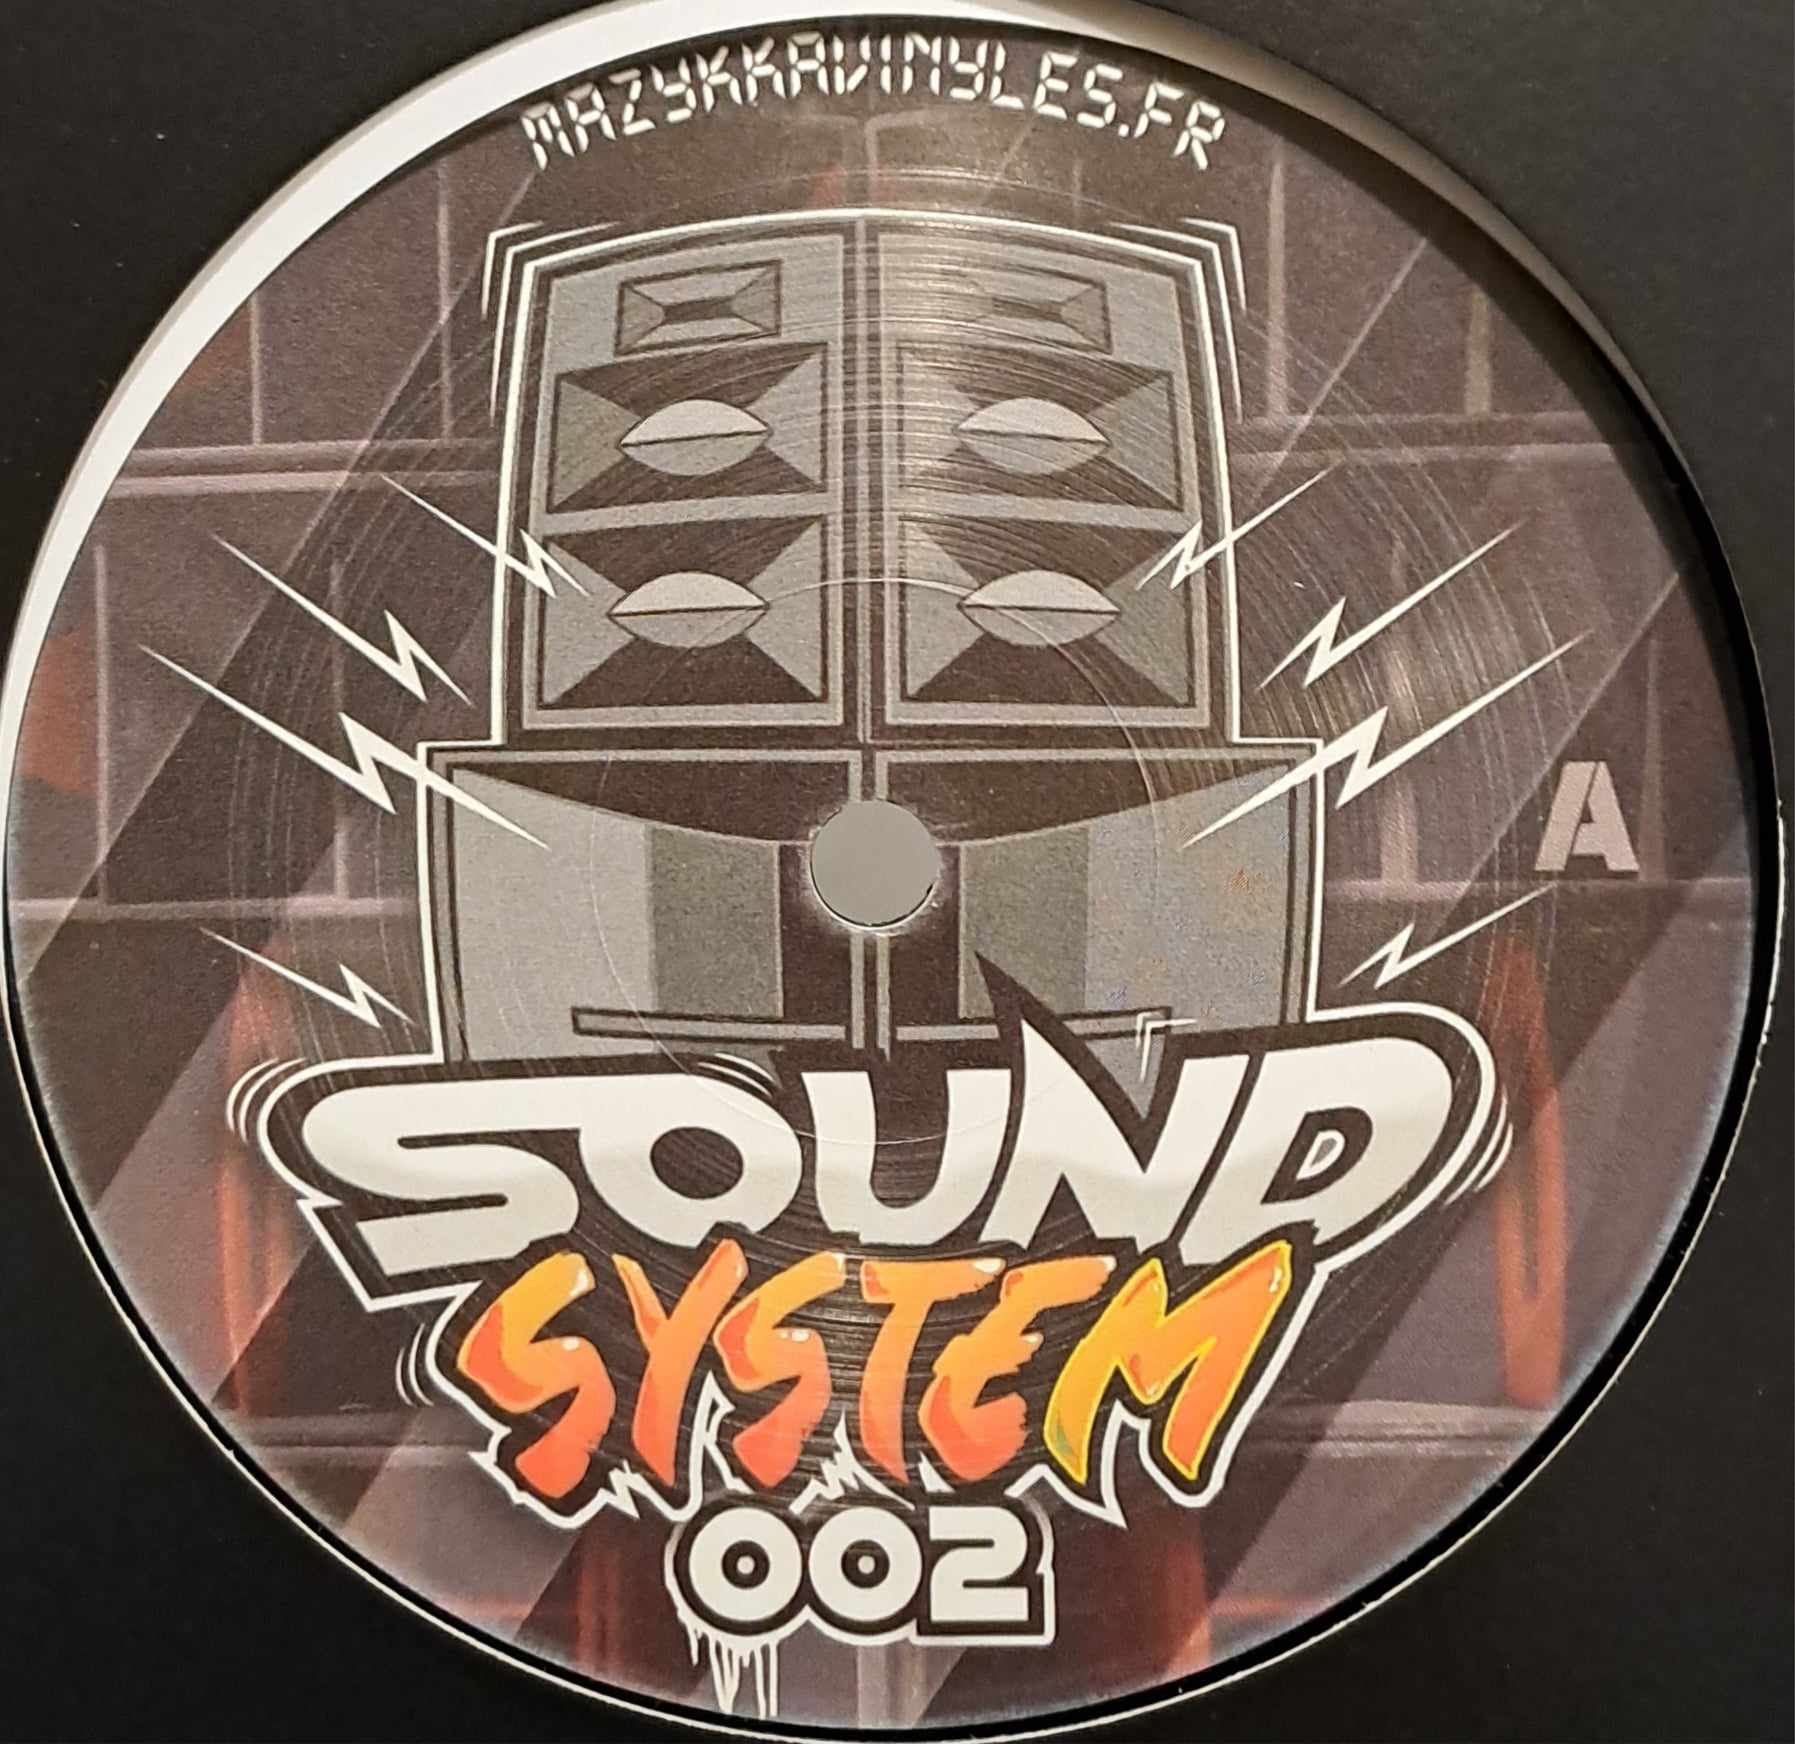 Sound System 002 - vinyle tribecore